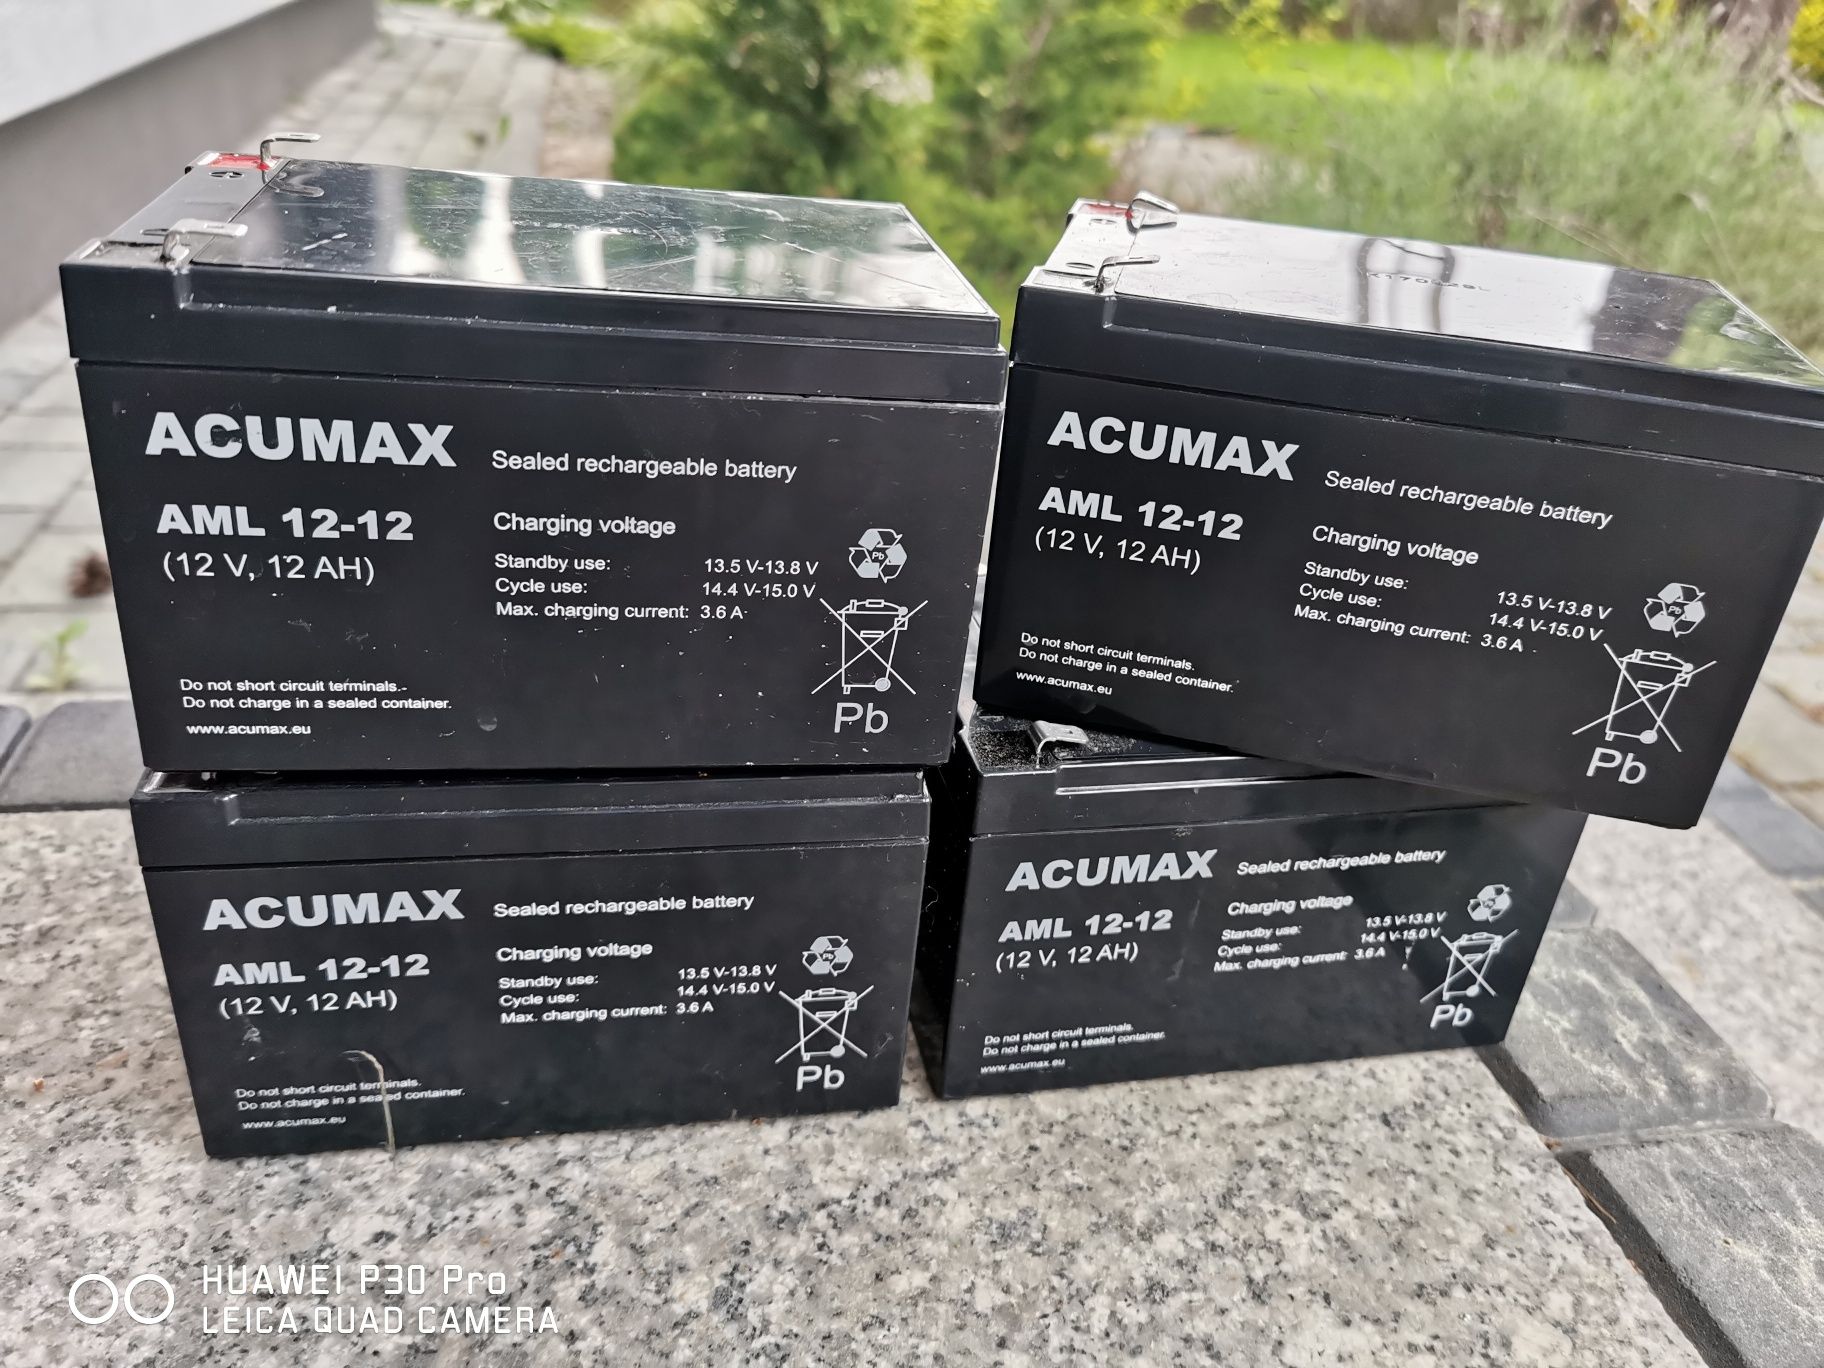 Akumulatory żelowe Acumax AML 12-12